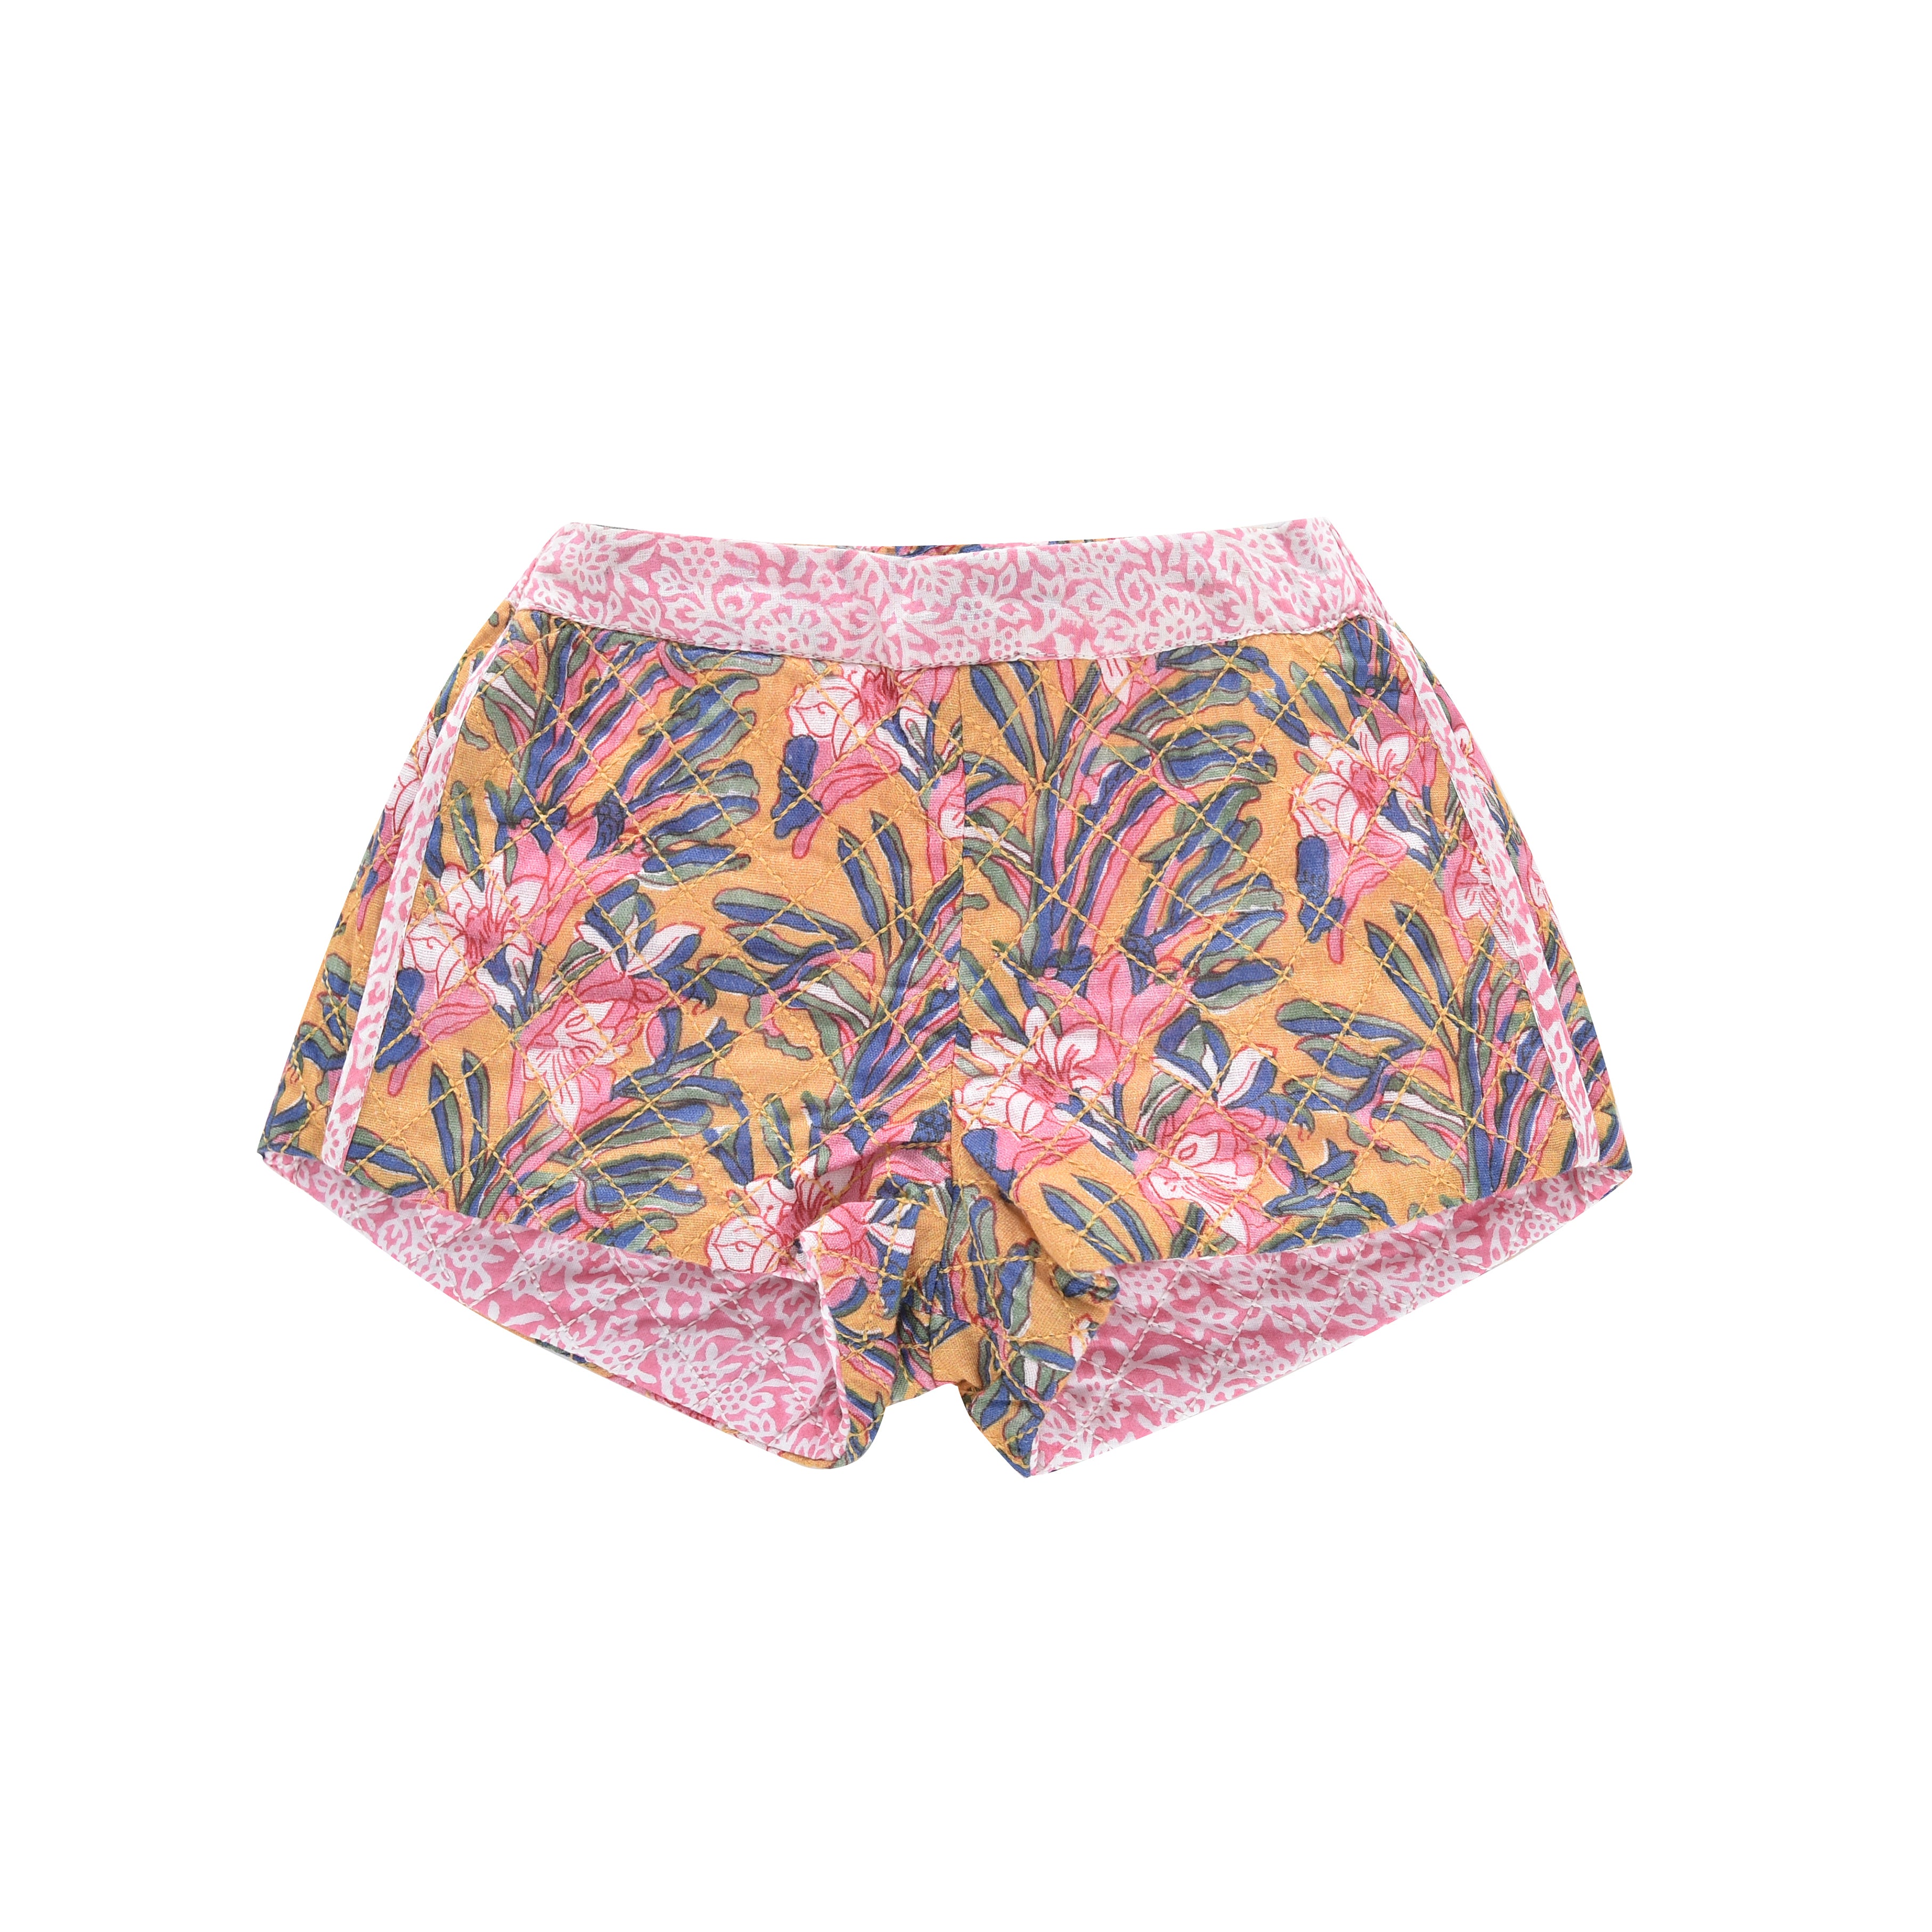 Girls Pink Floral Cotton Shorts